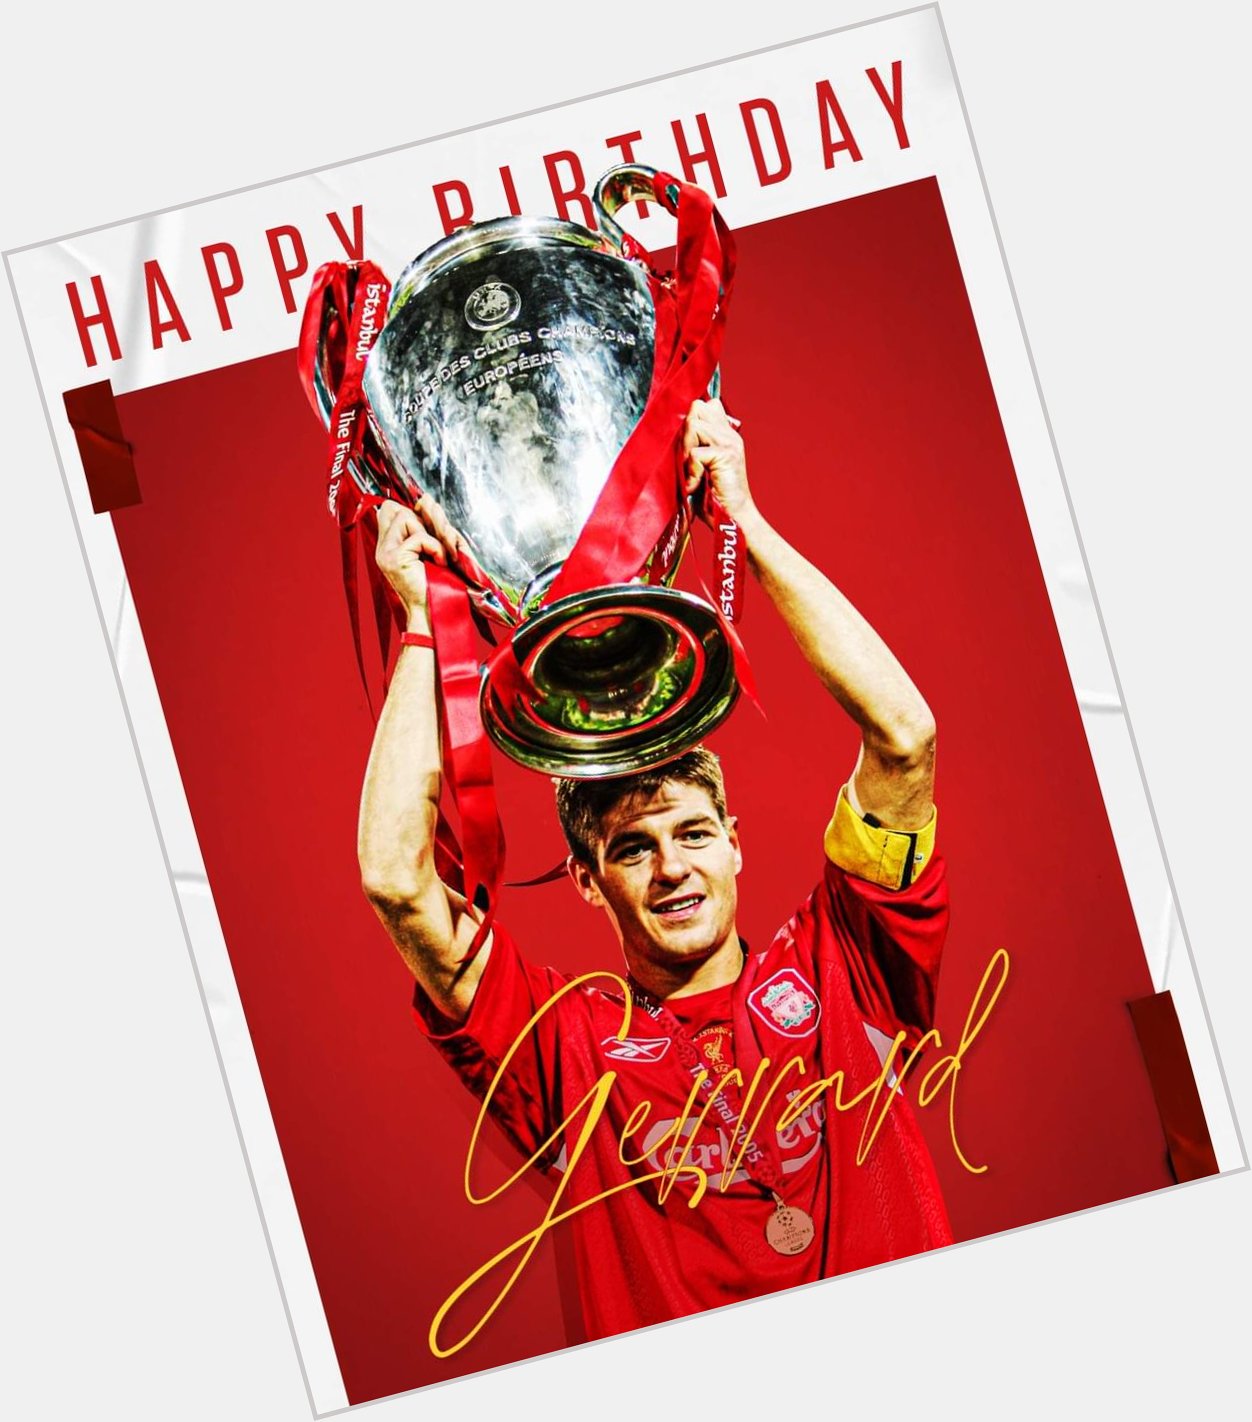 Happy birthday, Steven Gerrard.     